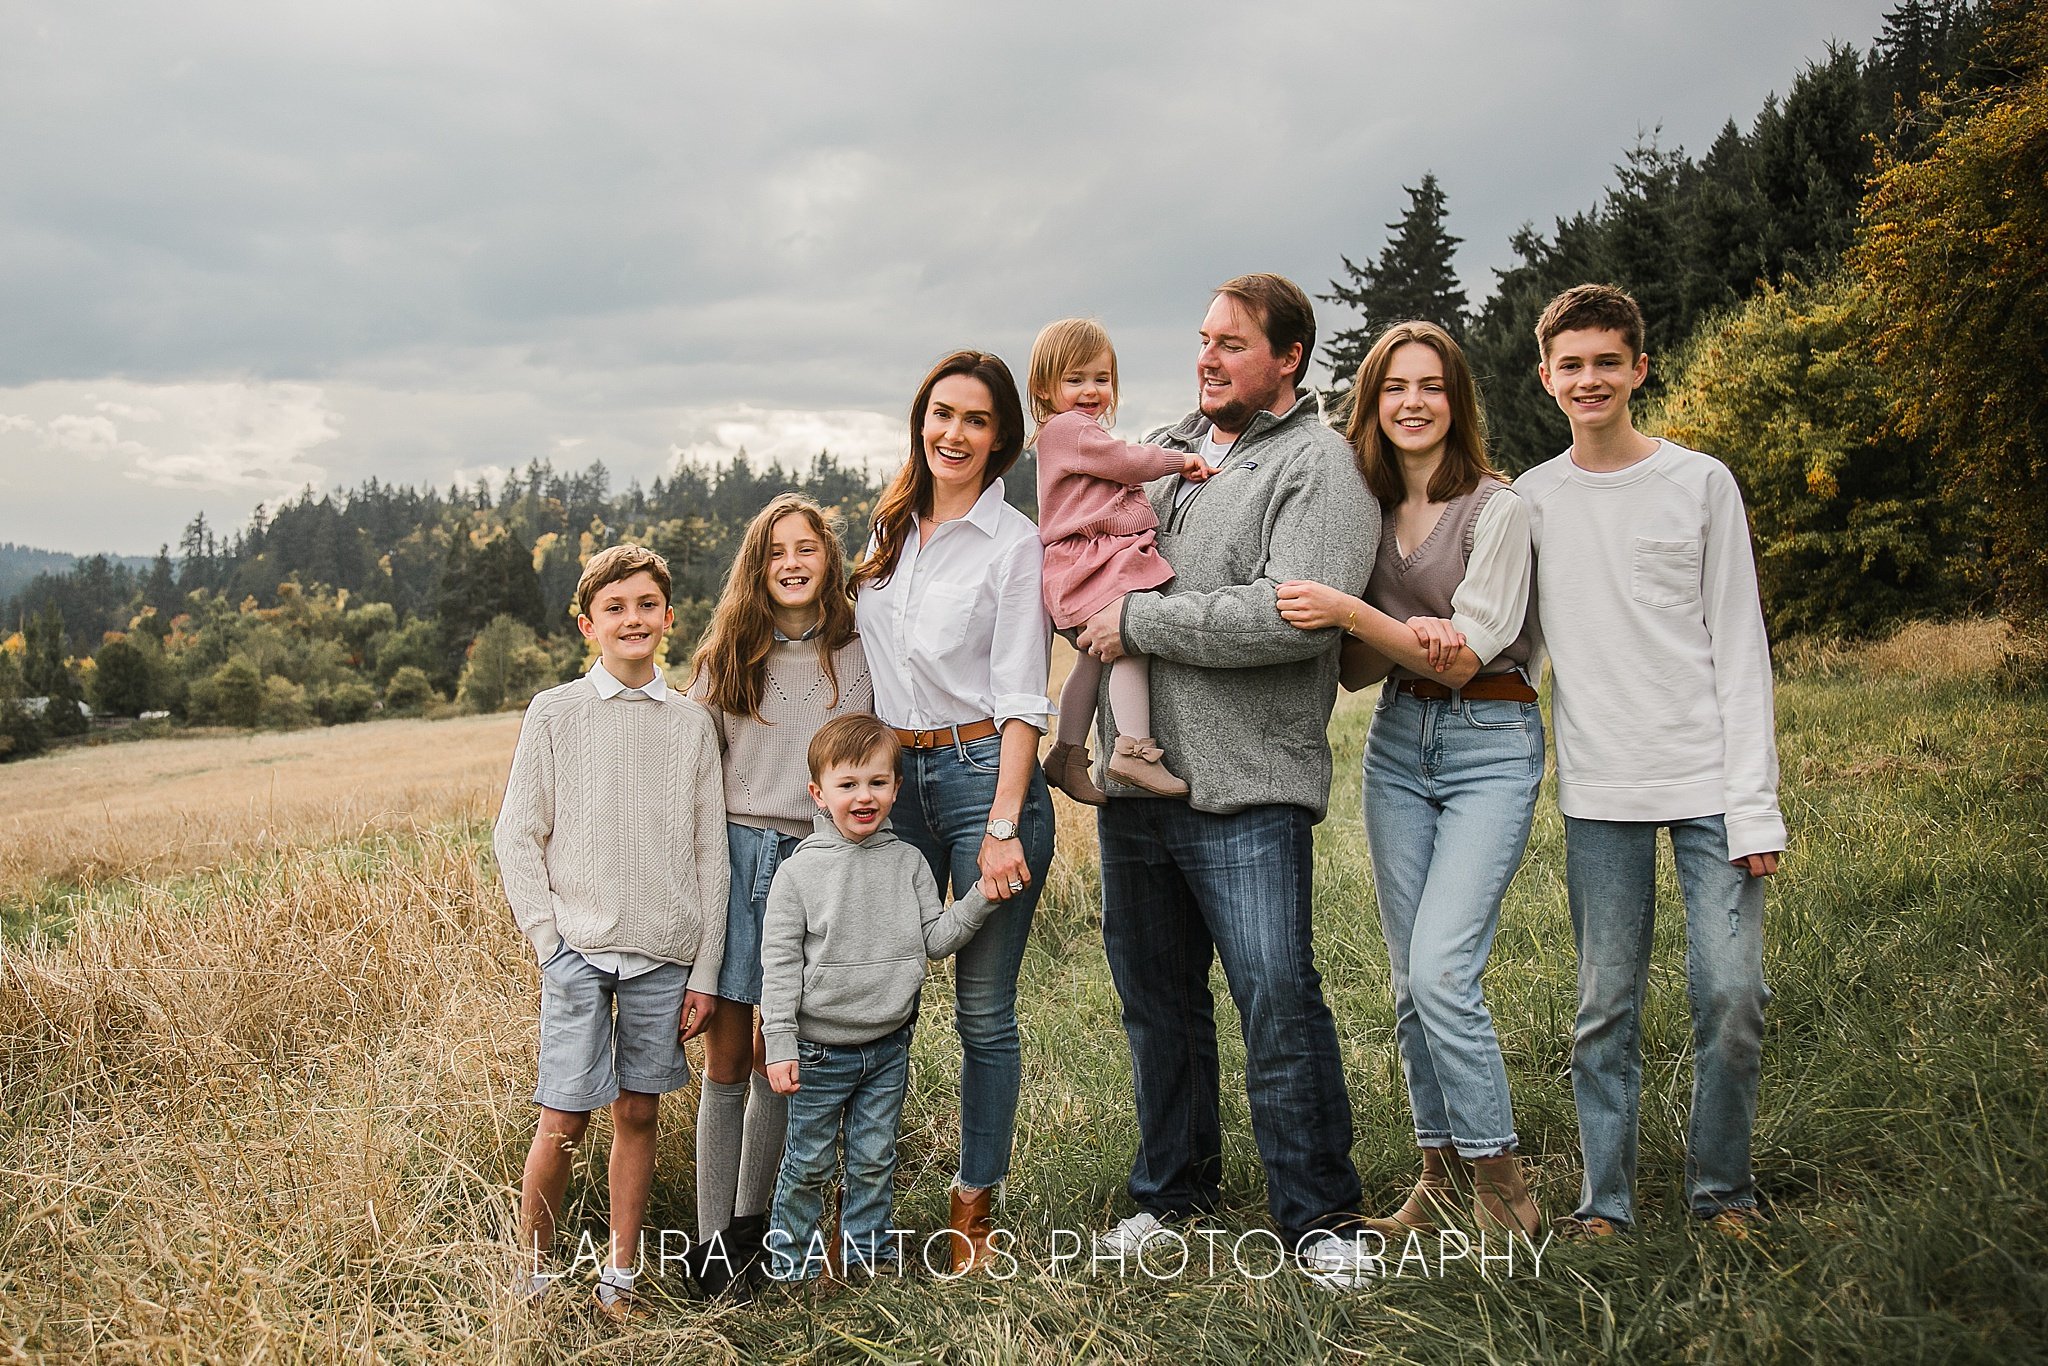 Laura Santos Photography Portland Oregon Family Photographer_2955.jpg